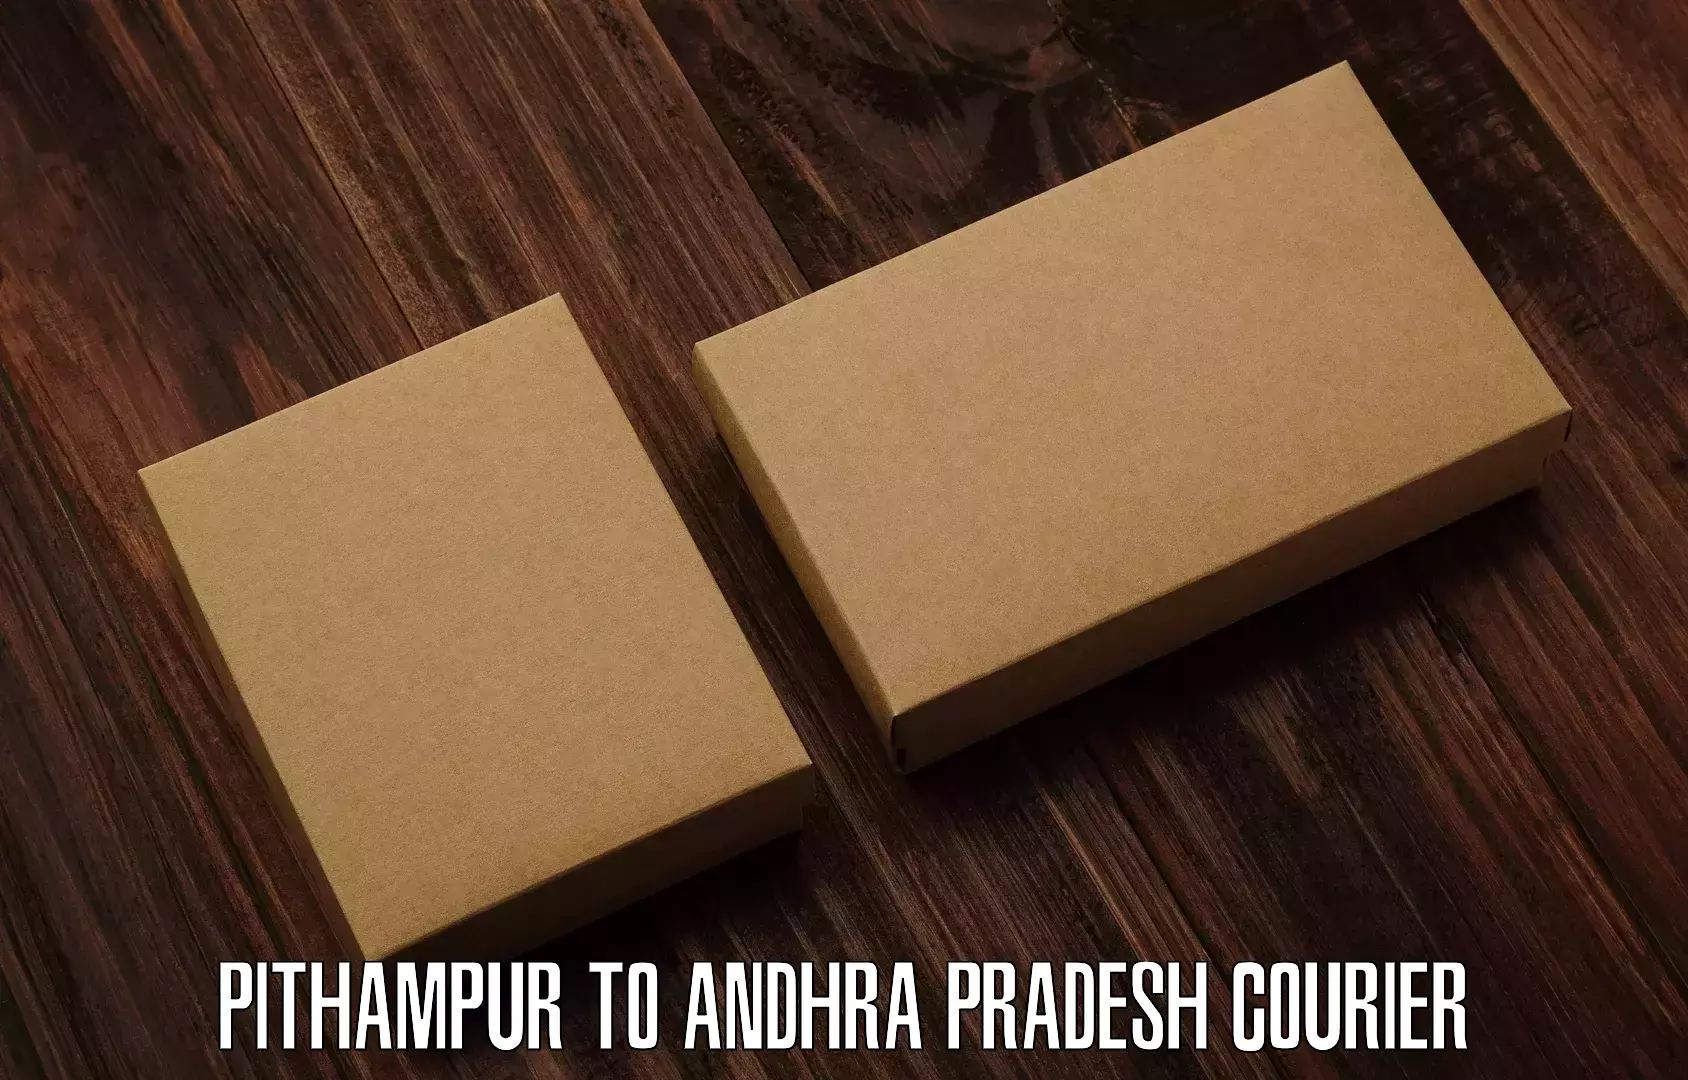 Reliable delivery network Pithampur to Veldurthi